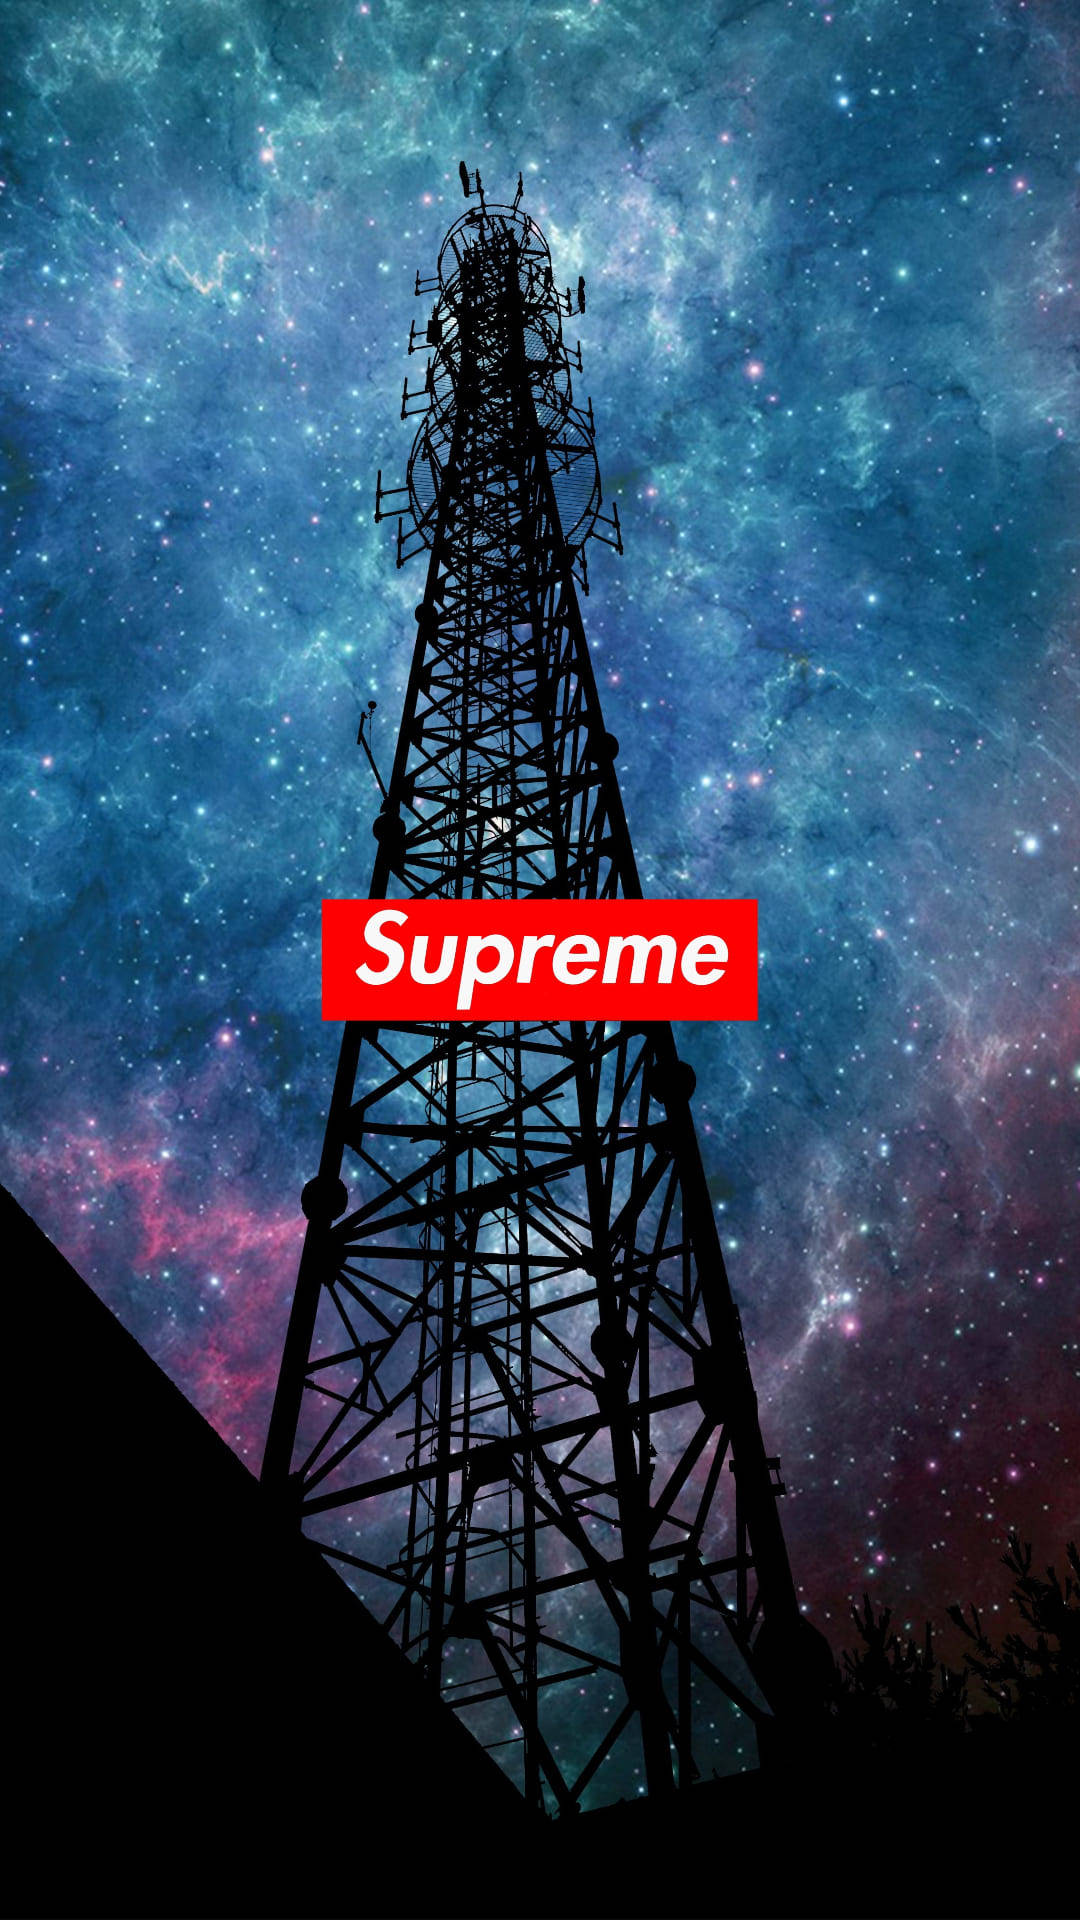 Cool Supreme Galaxy Tower Wallpaper